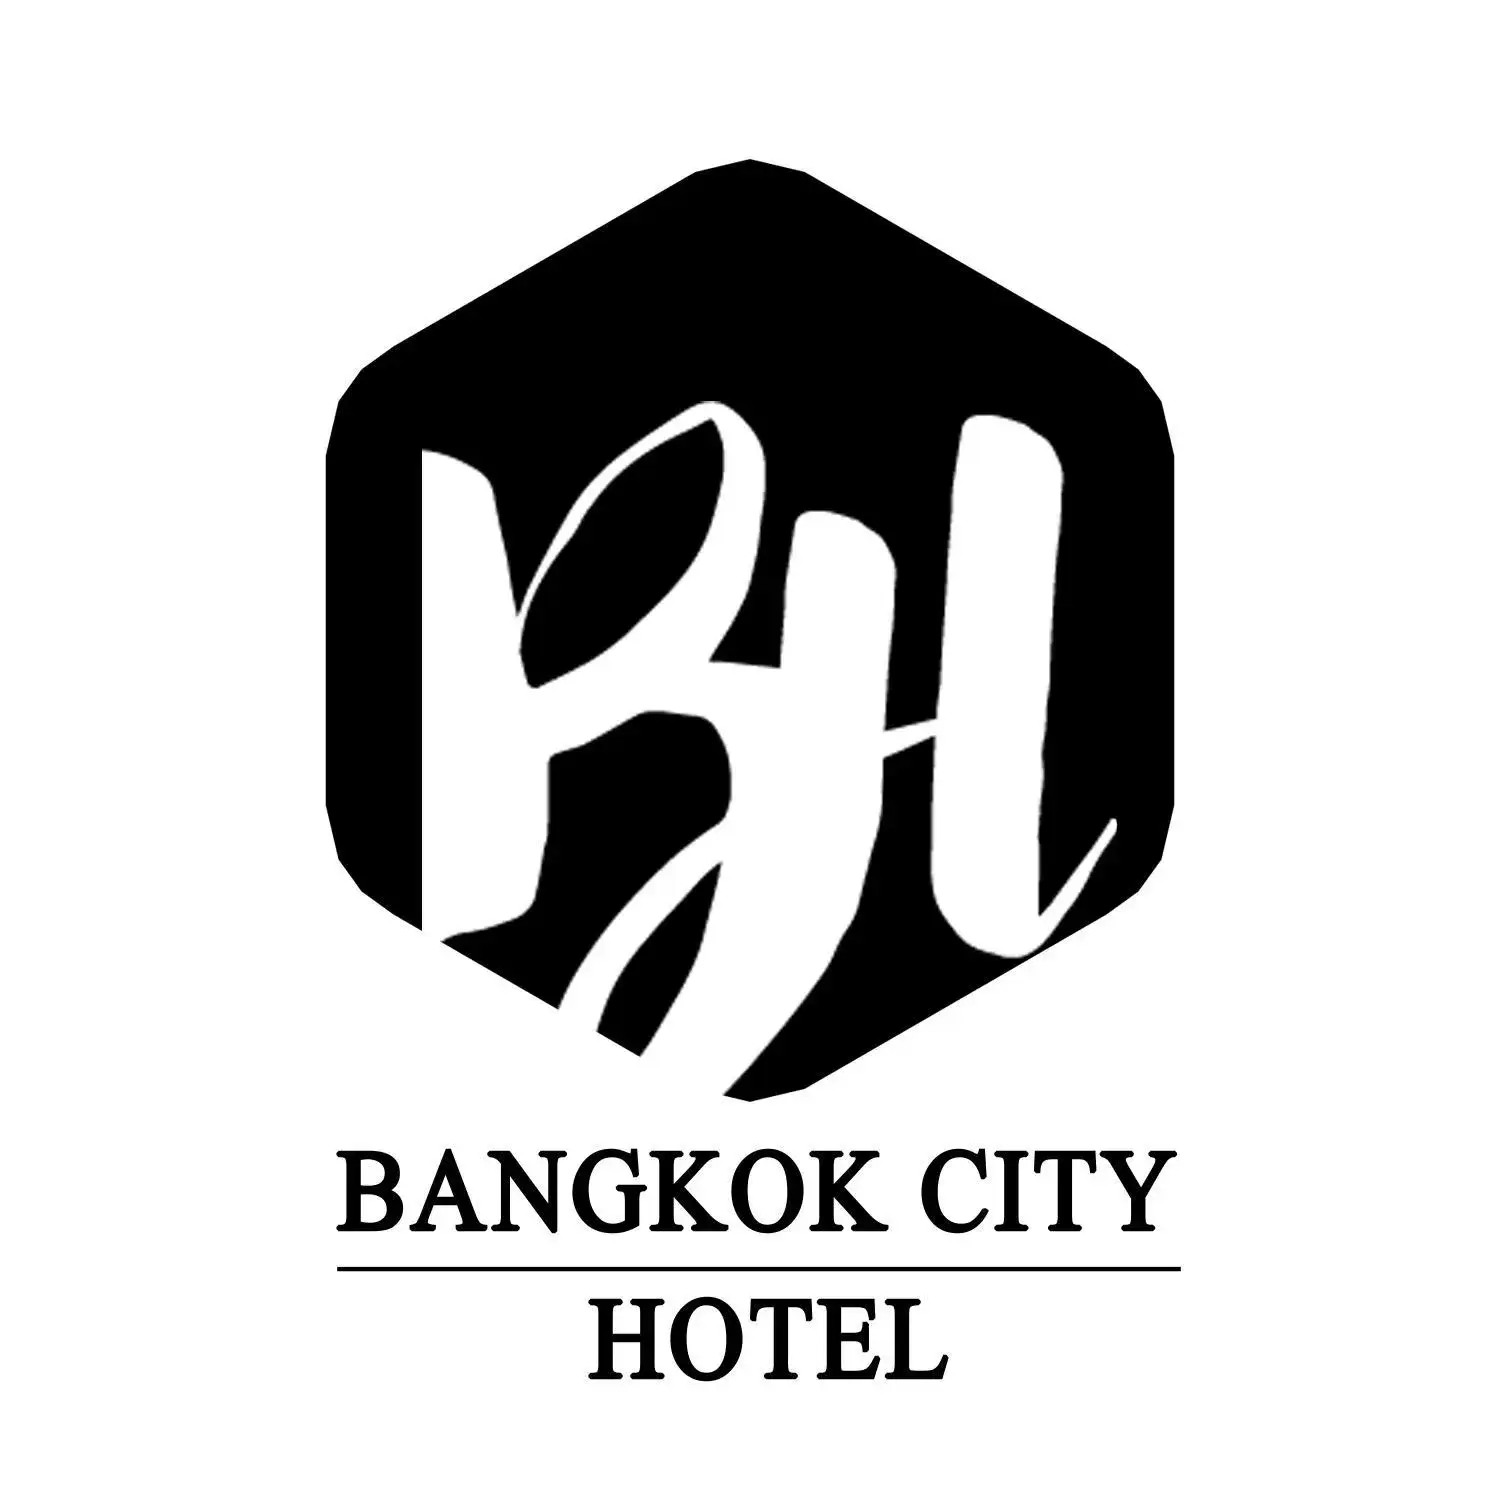 Property logo or sign in Bangkok City Hotel